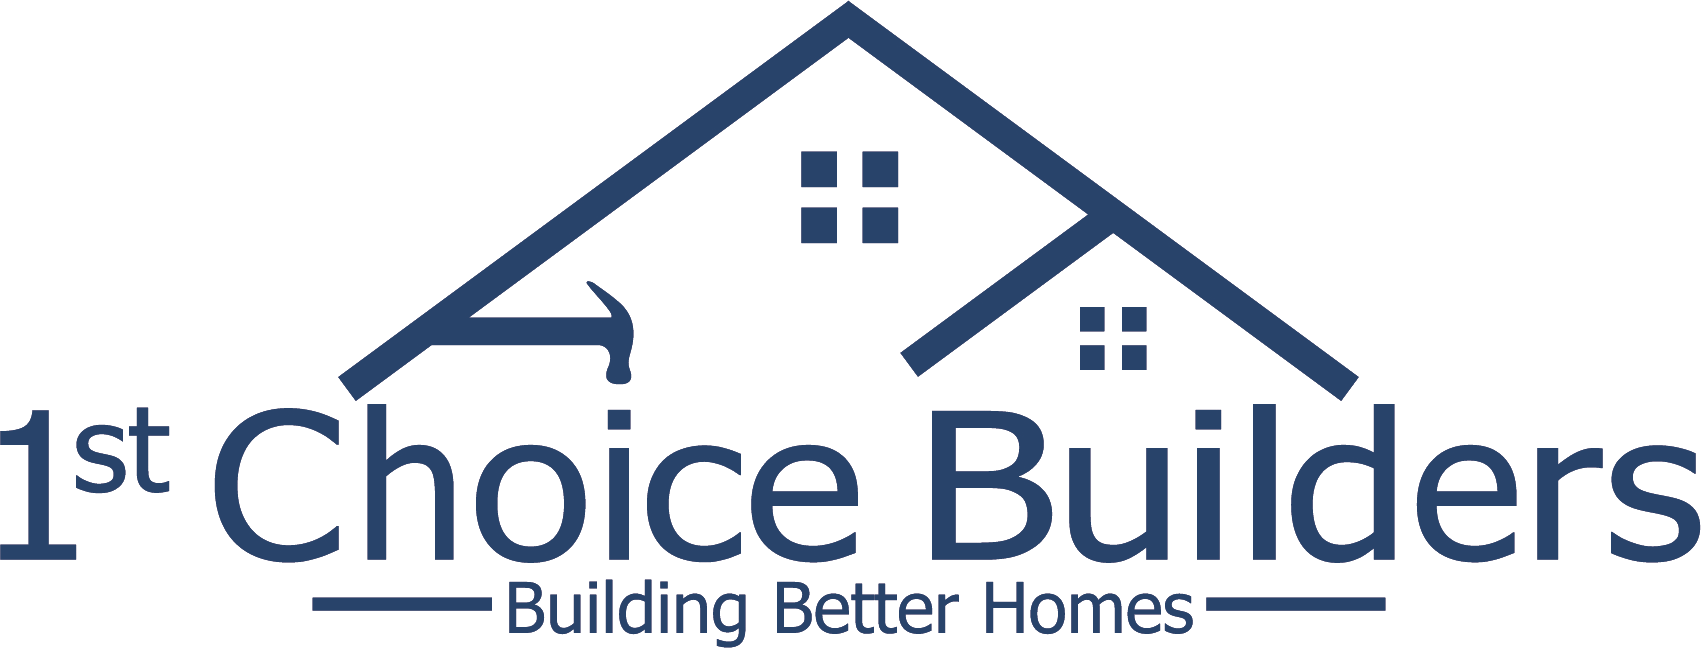 1st Choice Builders, LLC